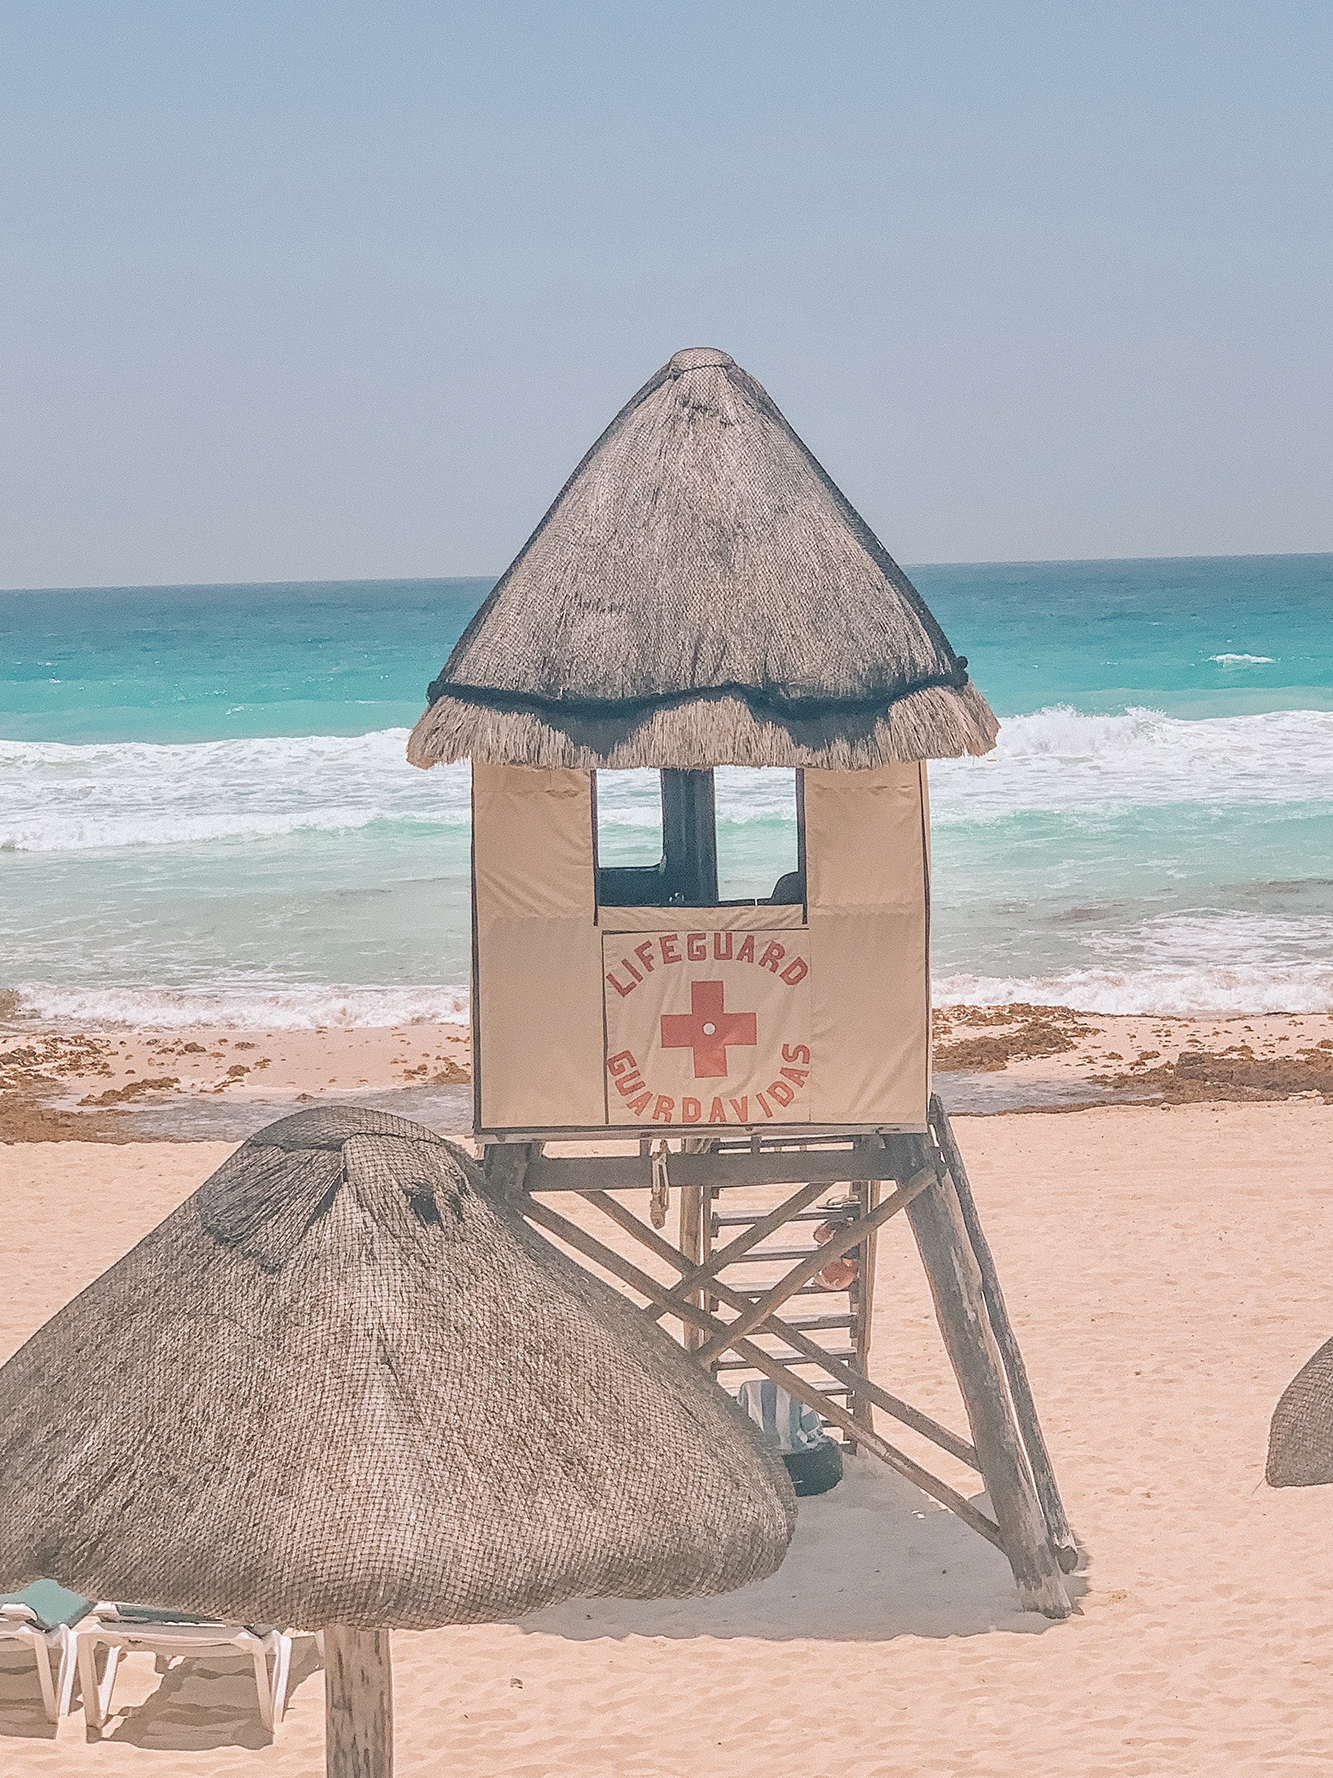 Cancun Mexico Travel Diary | Kristy Wicks